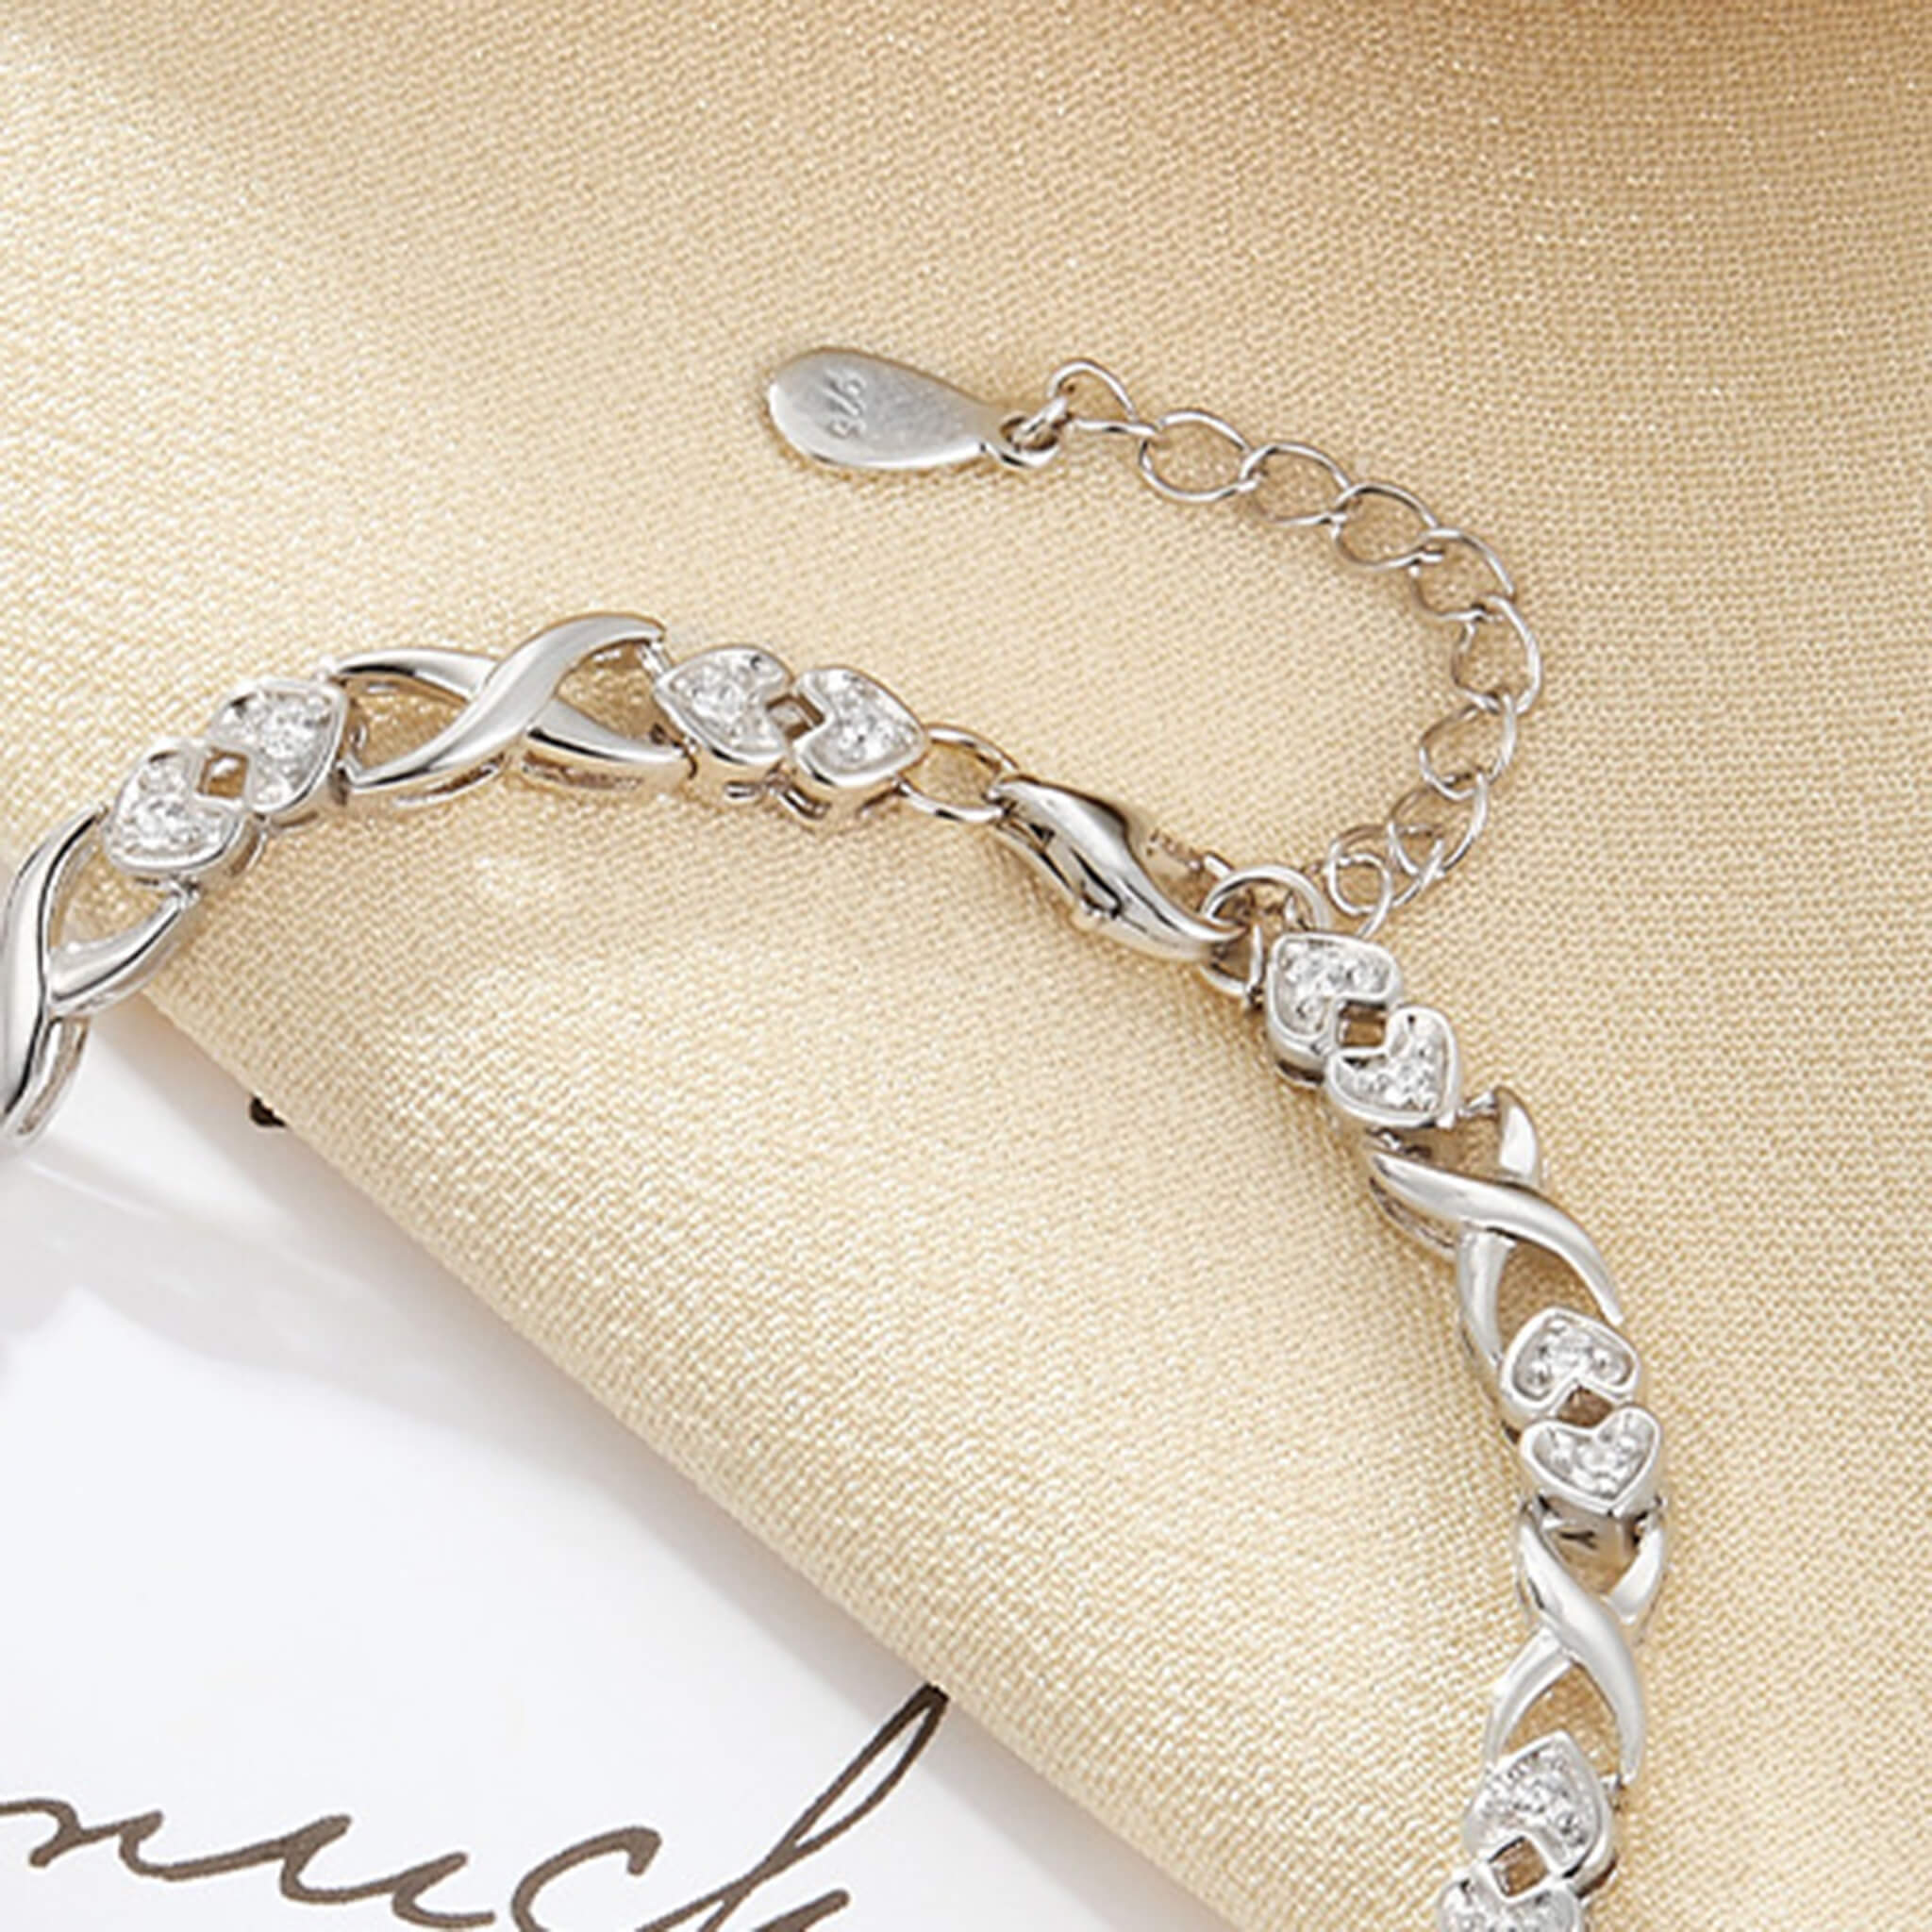 Minimalist Fashion 925 Silver Heart Charm Bracelet with Cubic Zirconia  UponBasics   